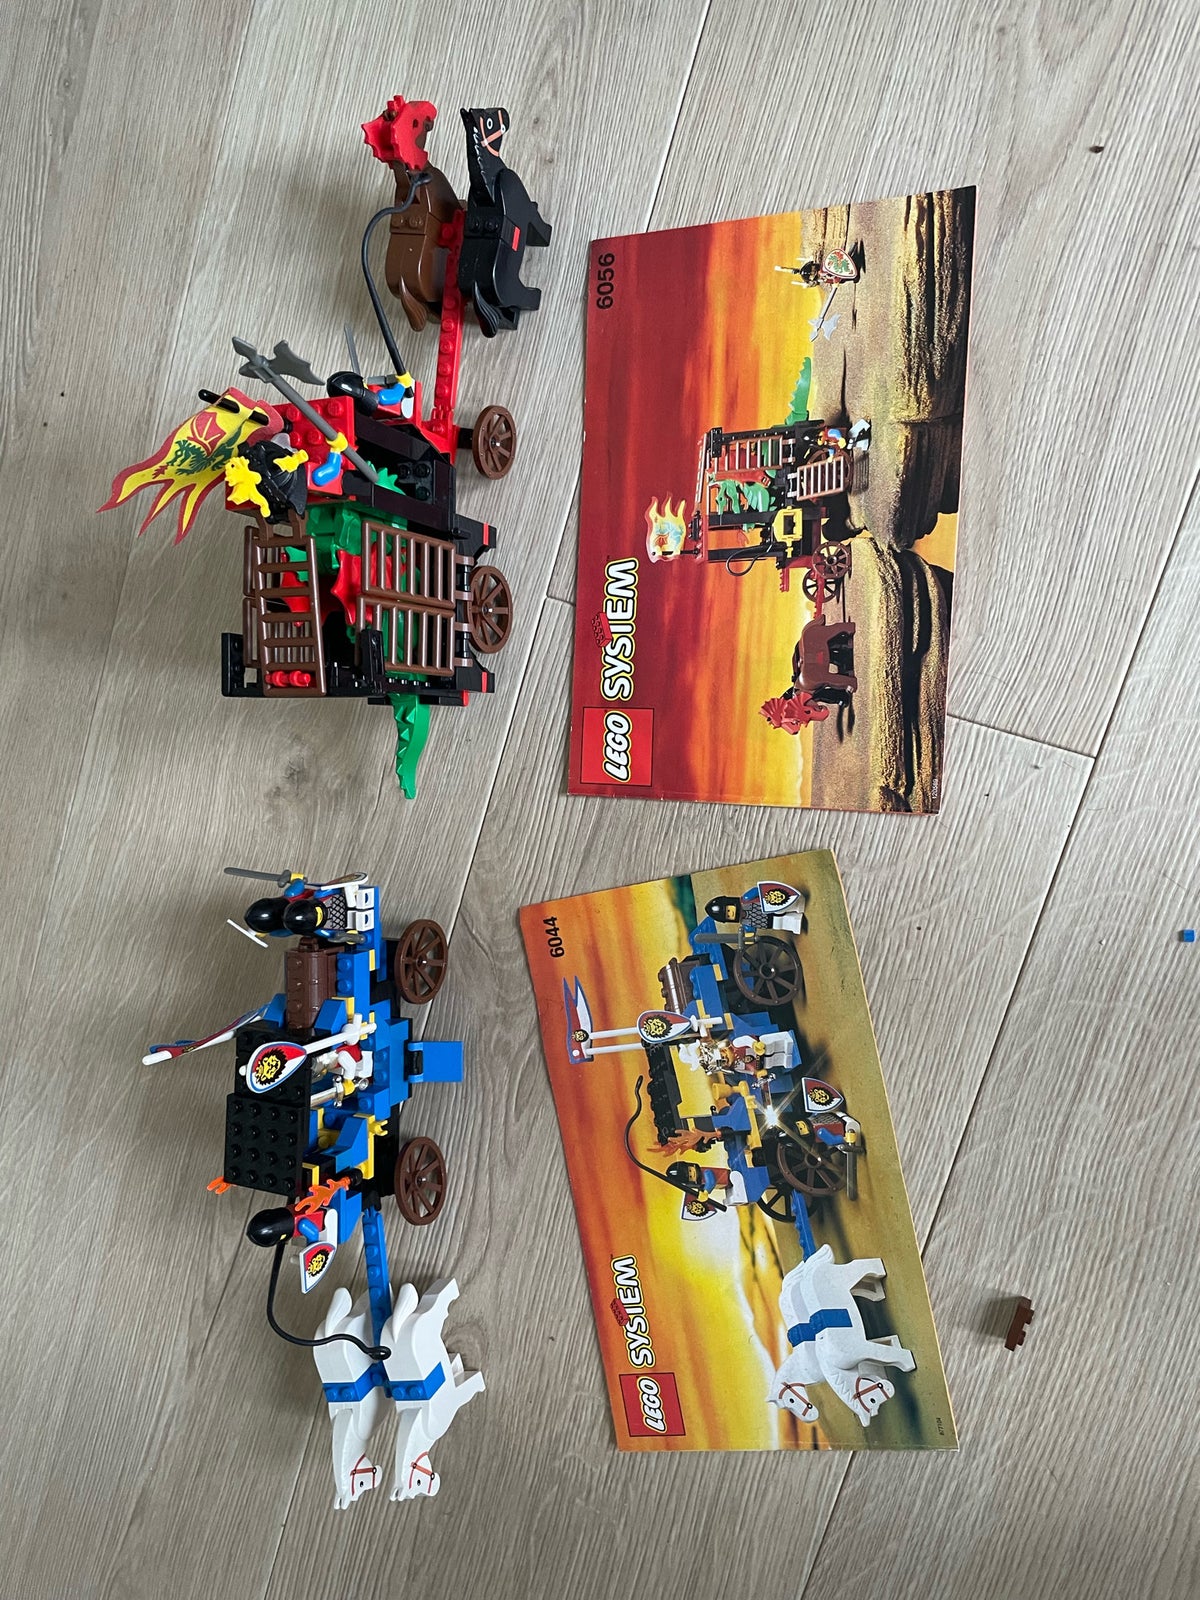 Lego Castle, 6076, 6044